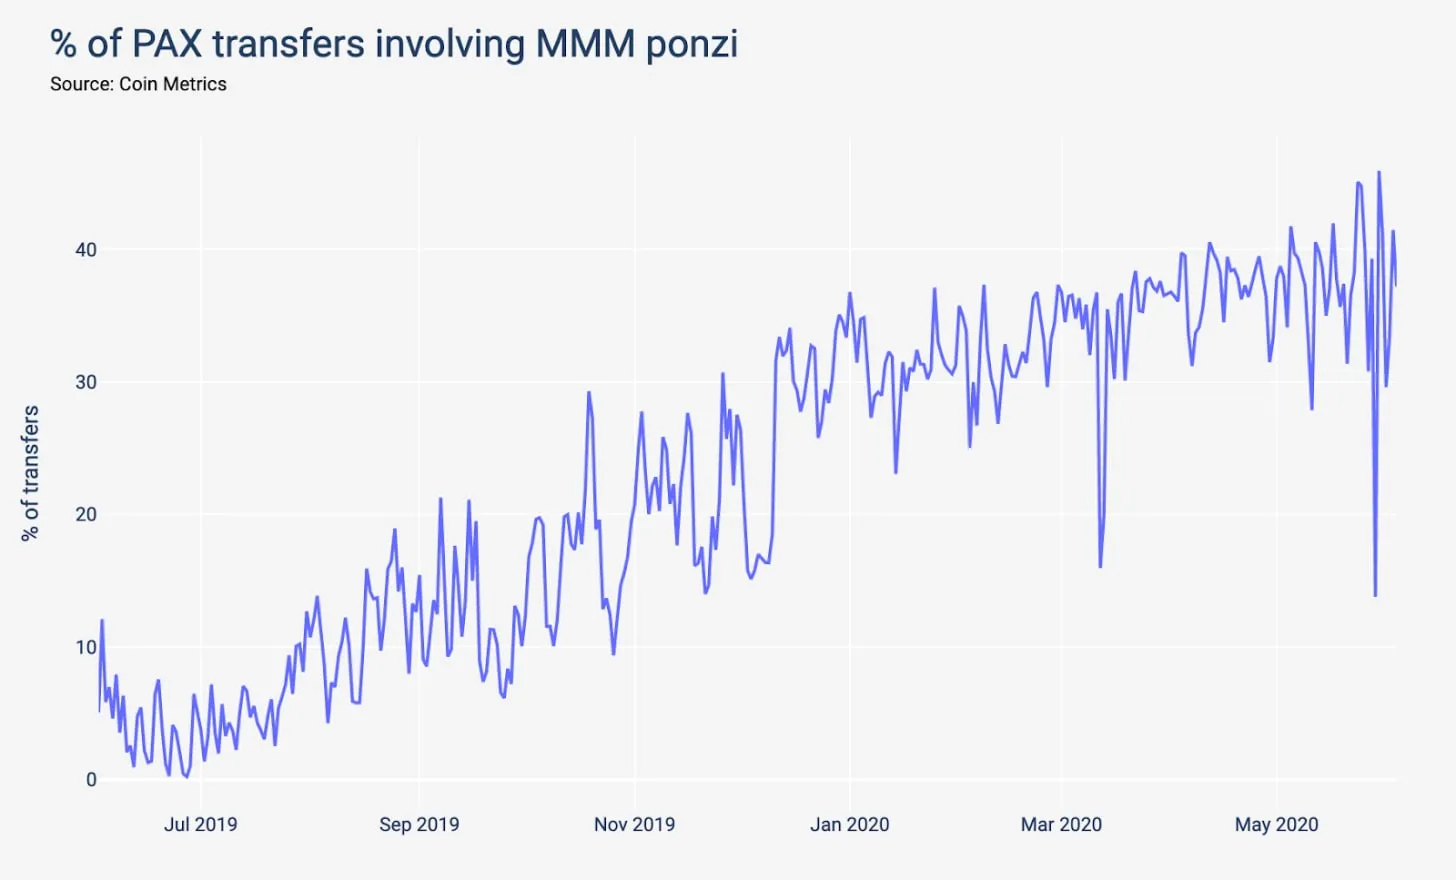 PAX transfers involving MMM ponzi